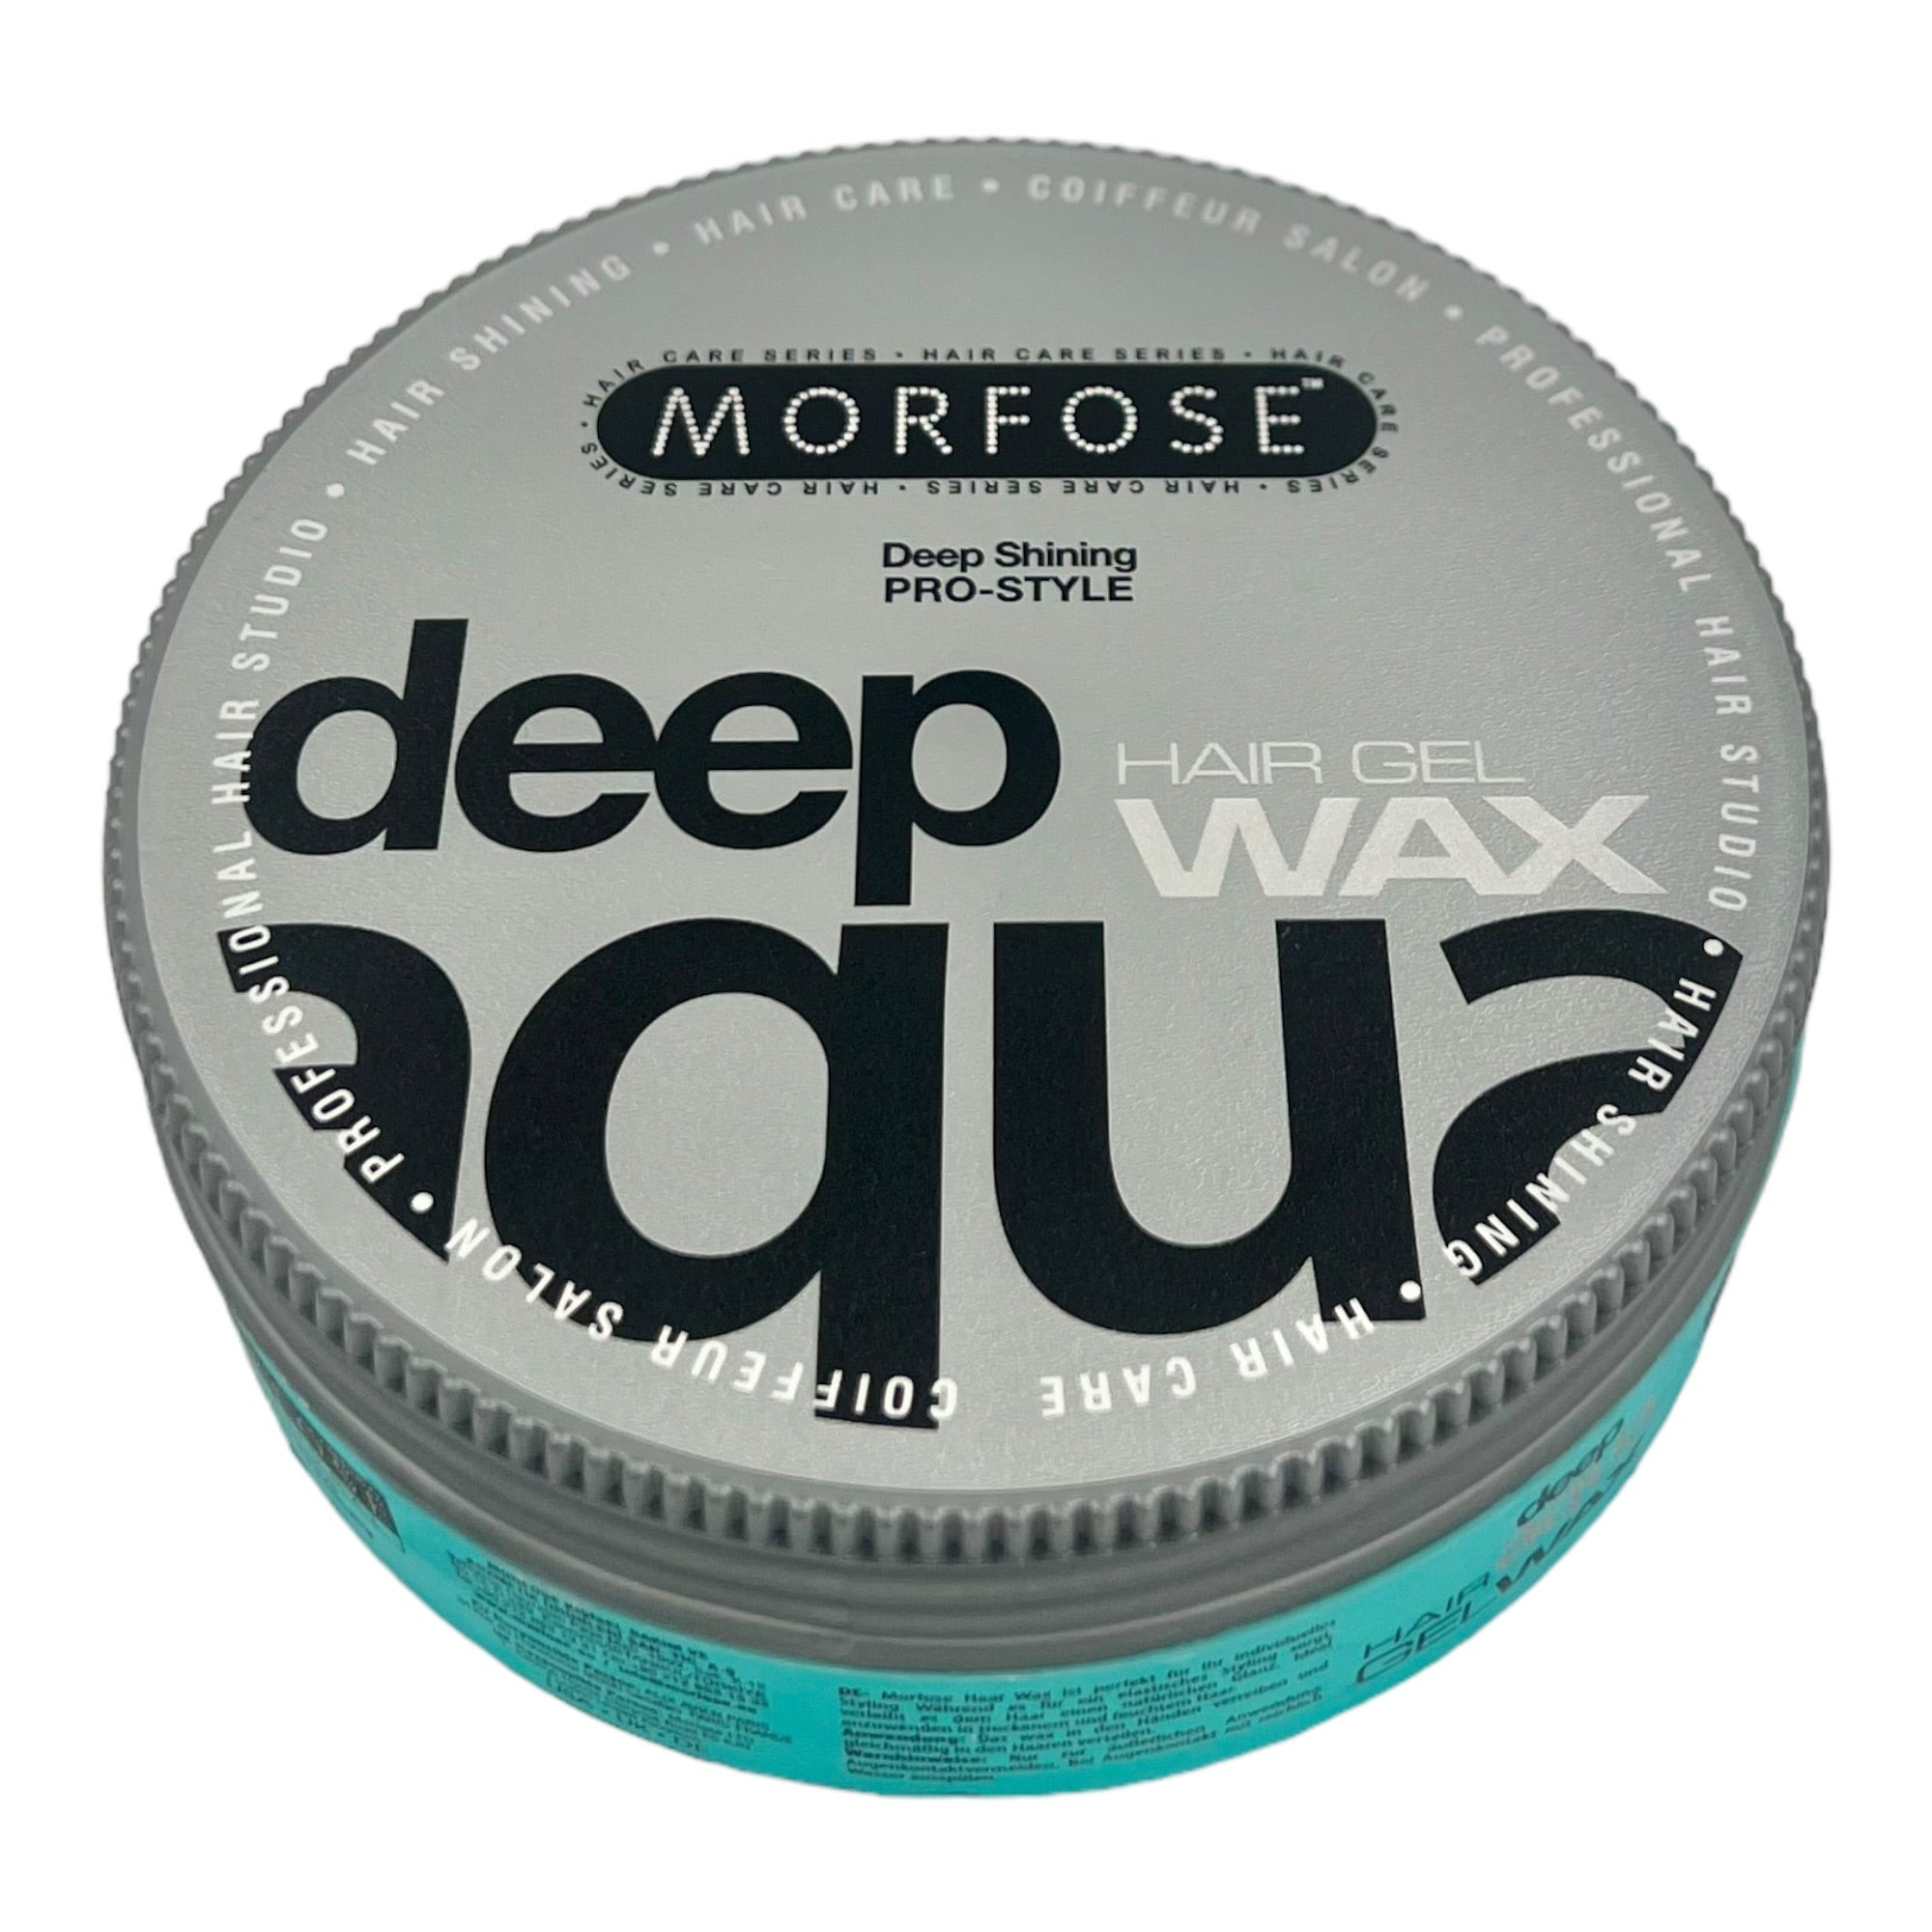 Morfose - Deep Aqua Hair Gel Wax 175ml